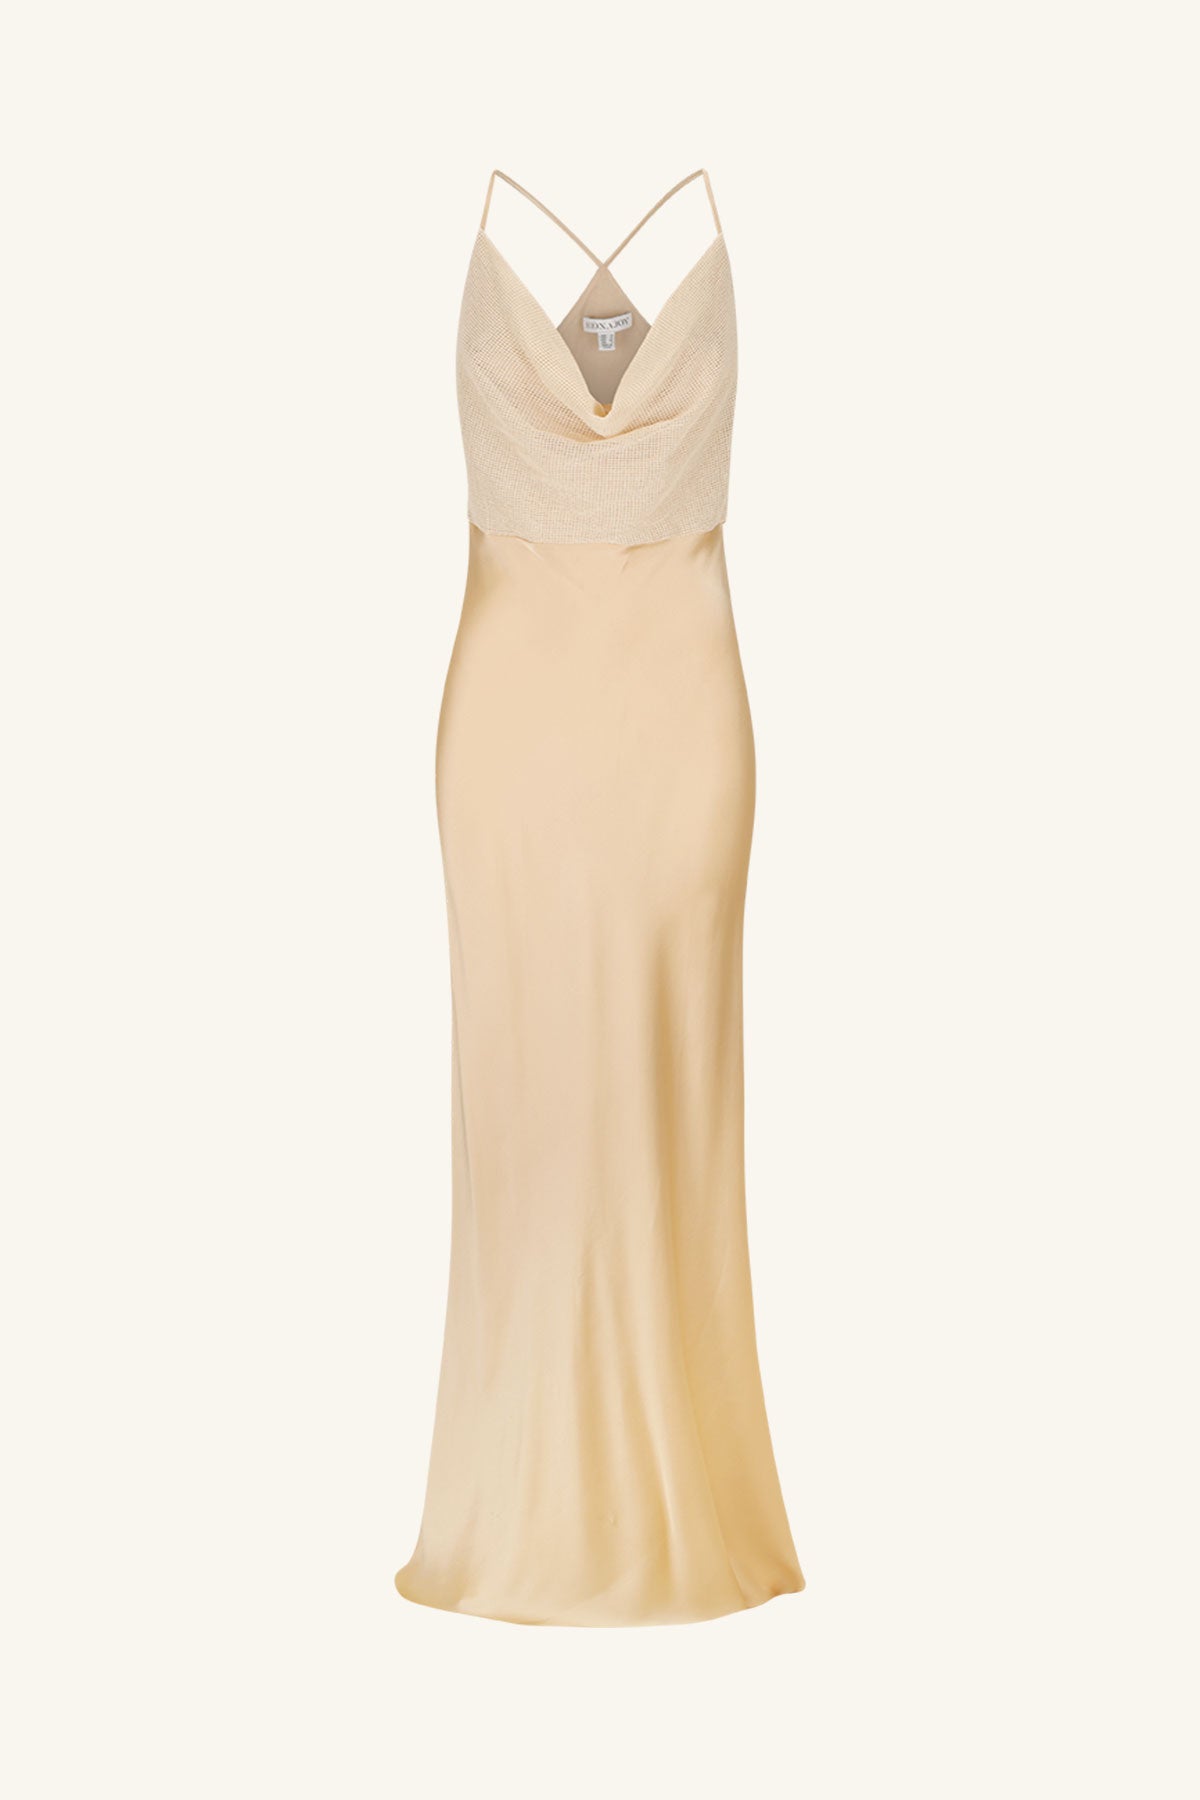 Shona Joy VALERIA SILK CONTRAST Cowl Neck Maxi Dress - Brand-Shona Joy :  Diahann Boutique - Shona Joy W24